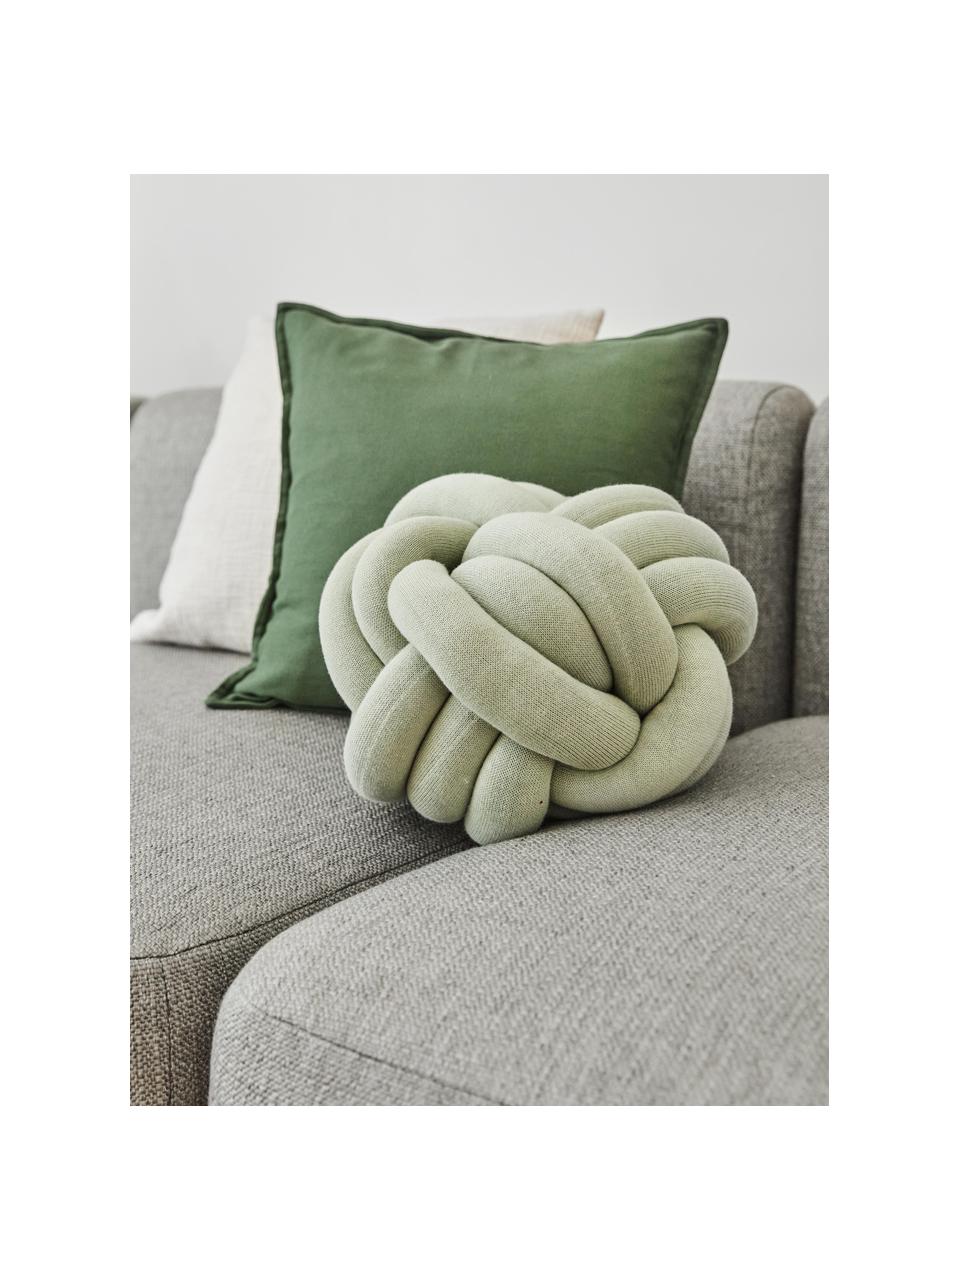 Cuscino annodato Twist, Verde salvia, Ø 30 cm